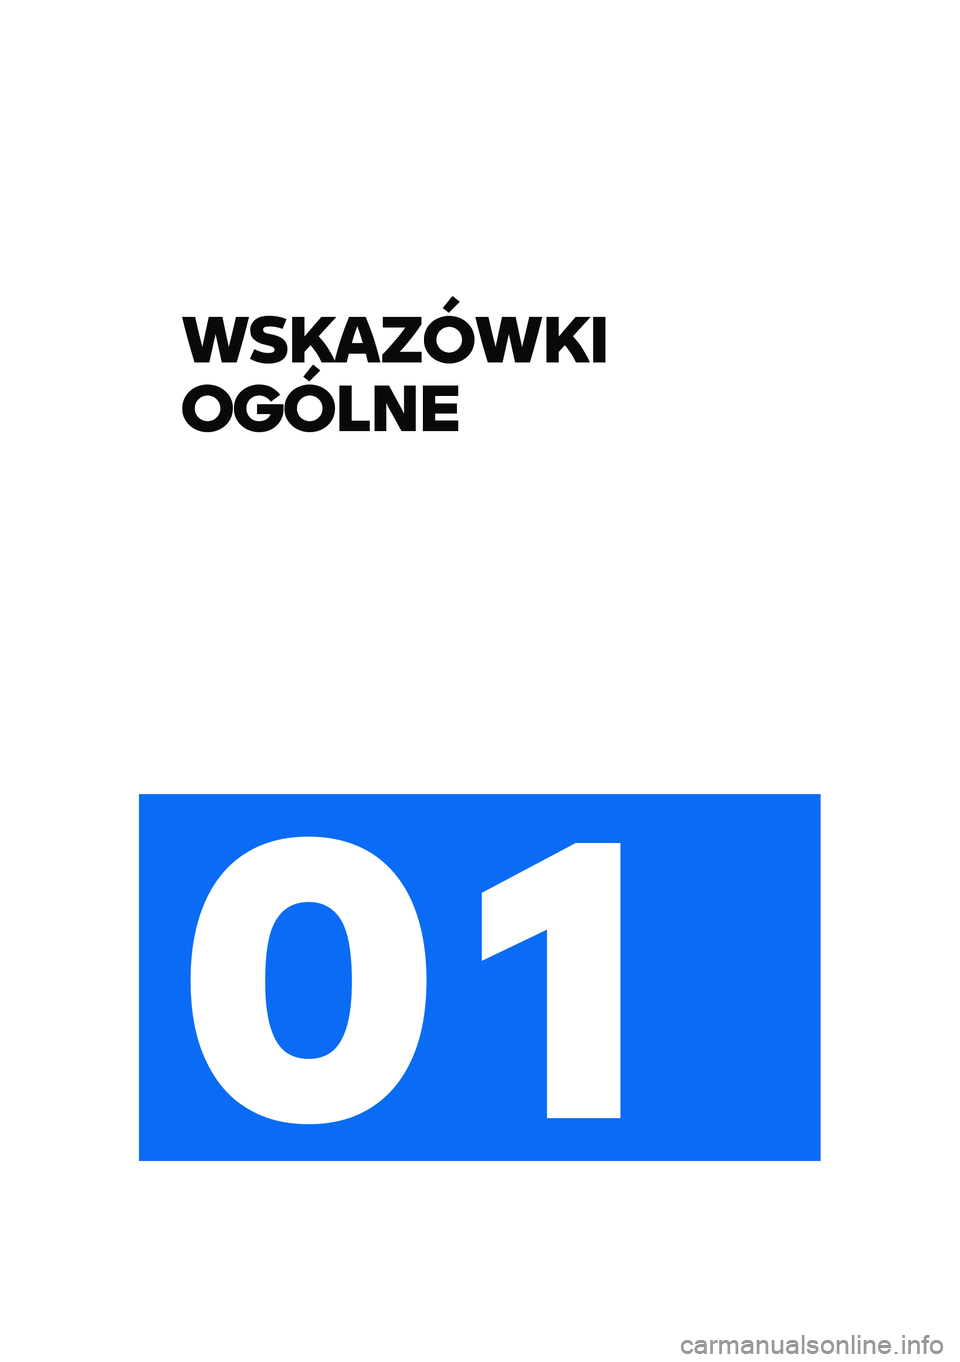 BMW MOTORRAD F 900 R 2020  Instrukcja obsługi (in Polish) ��
�������
������
�	� 